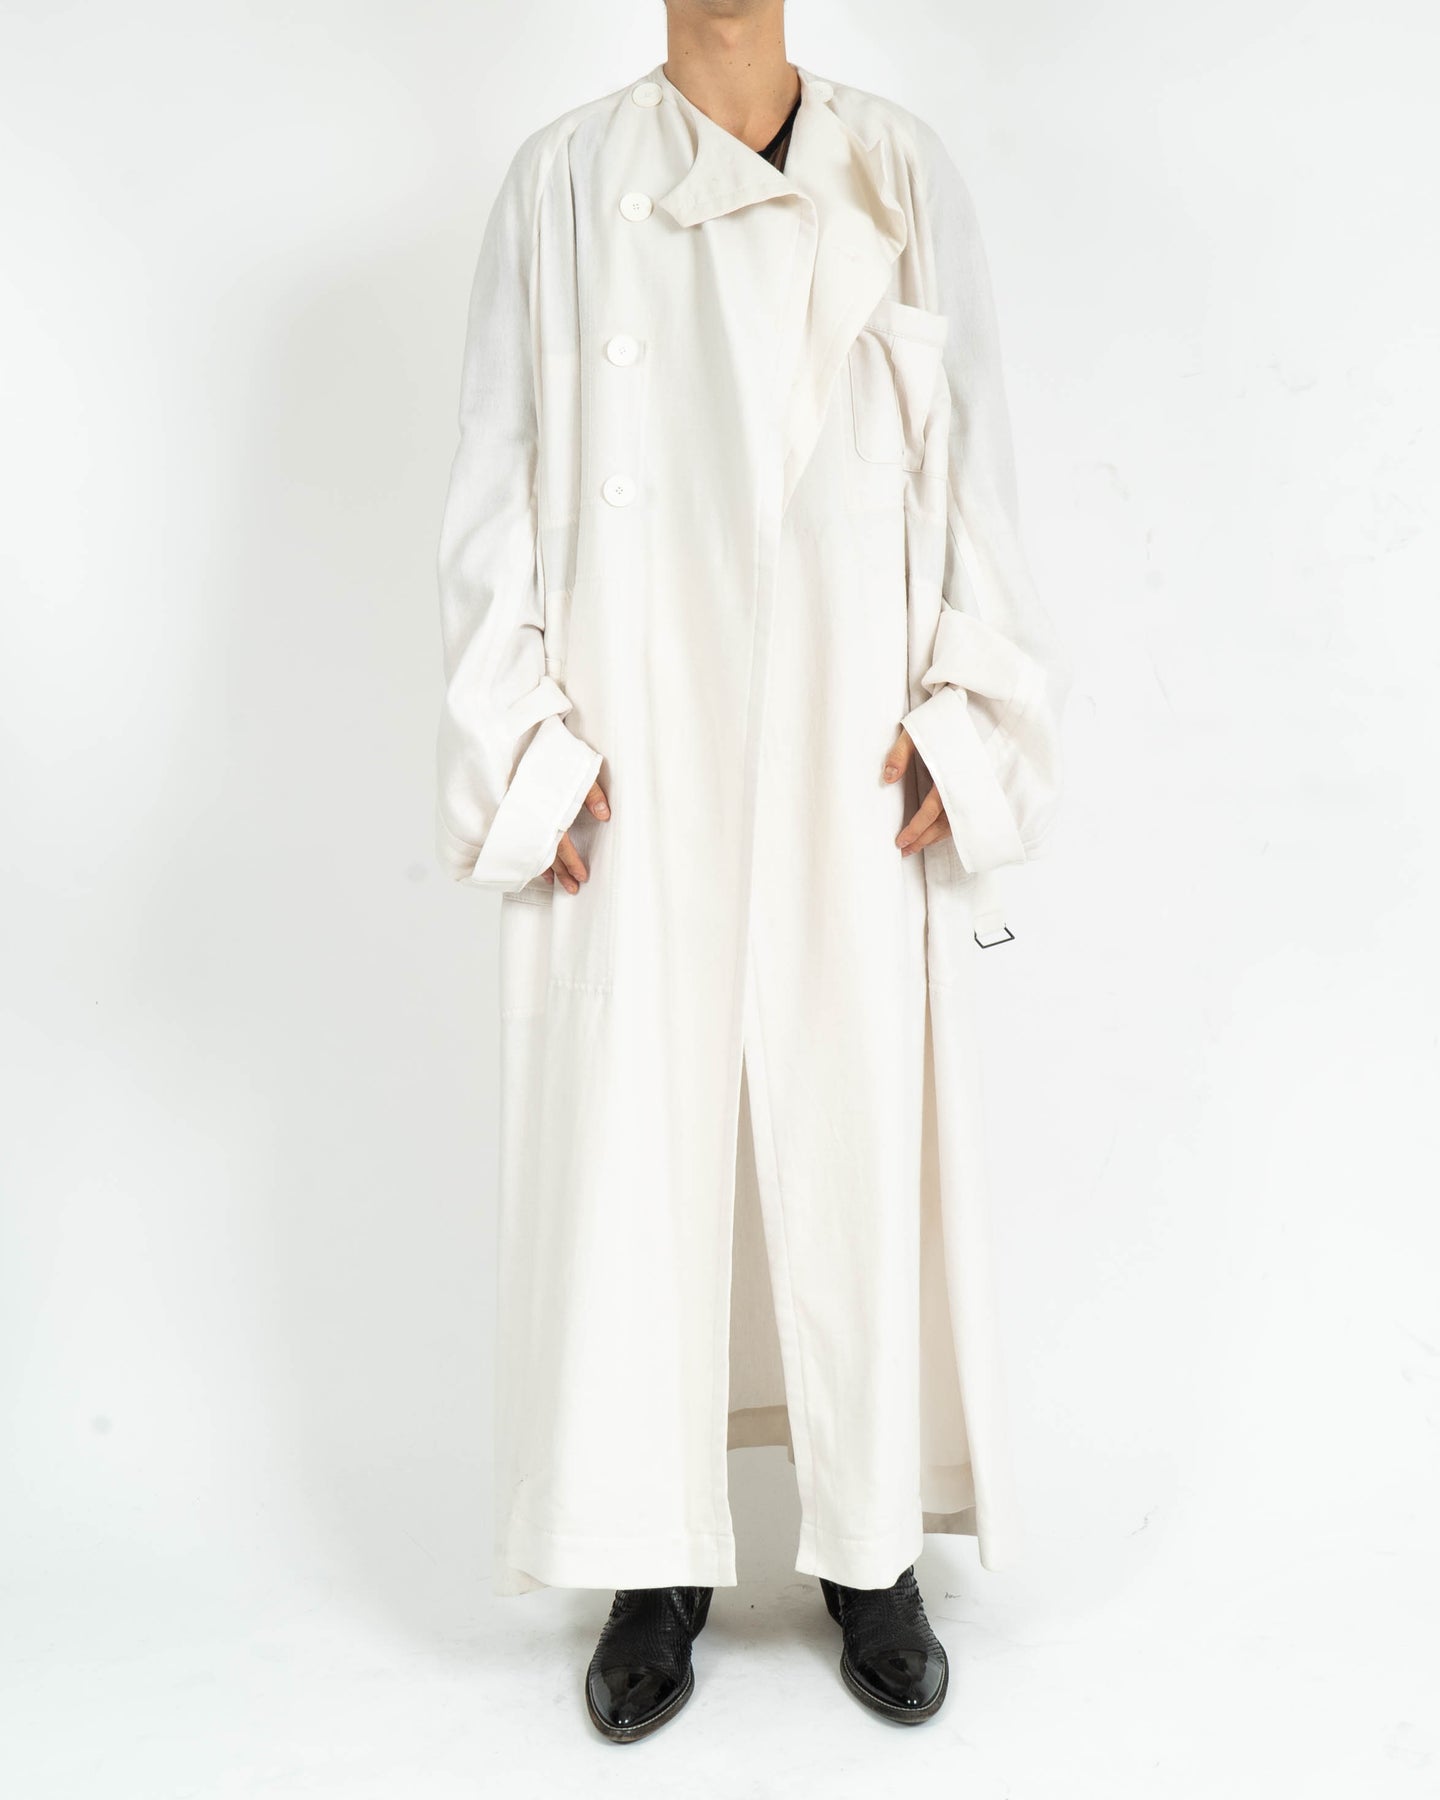 FW17 White Oversized Wool Overcoat